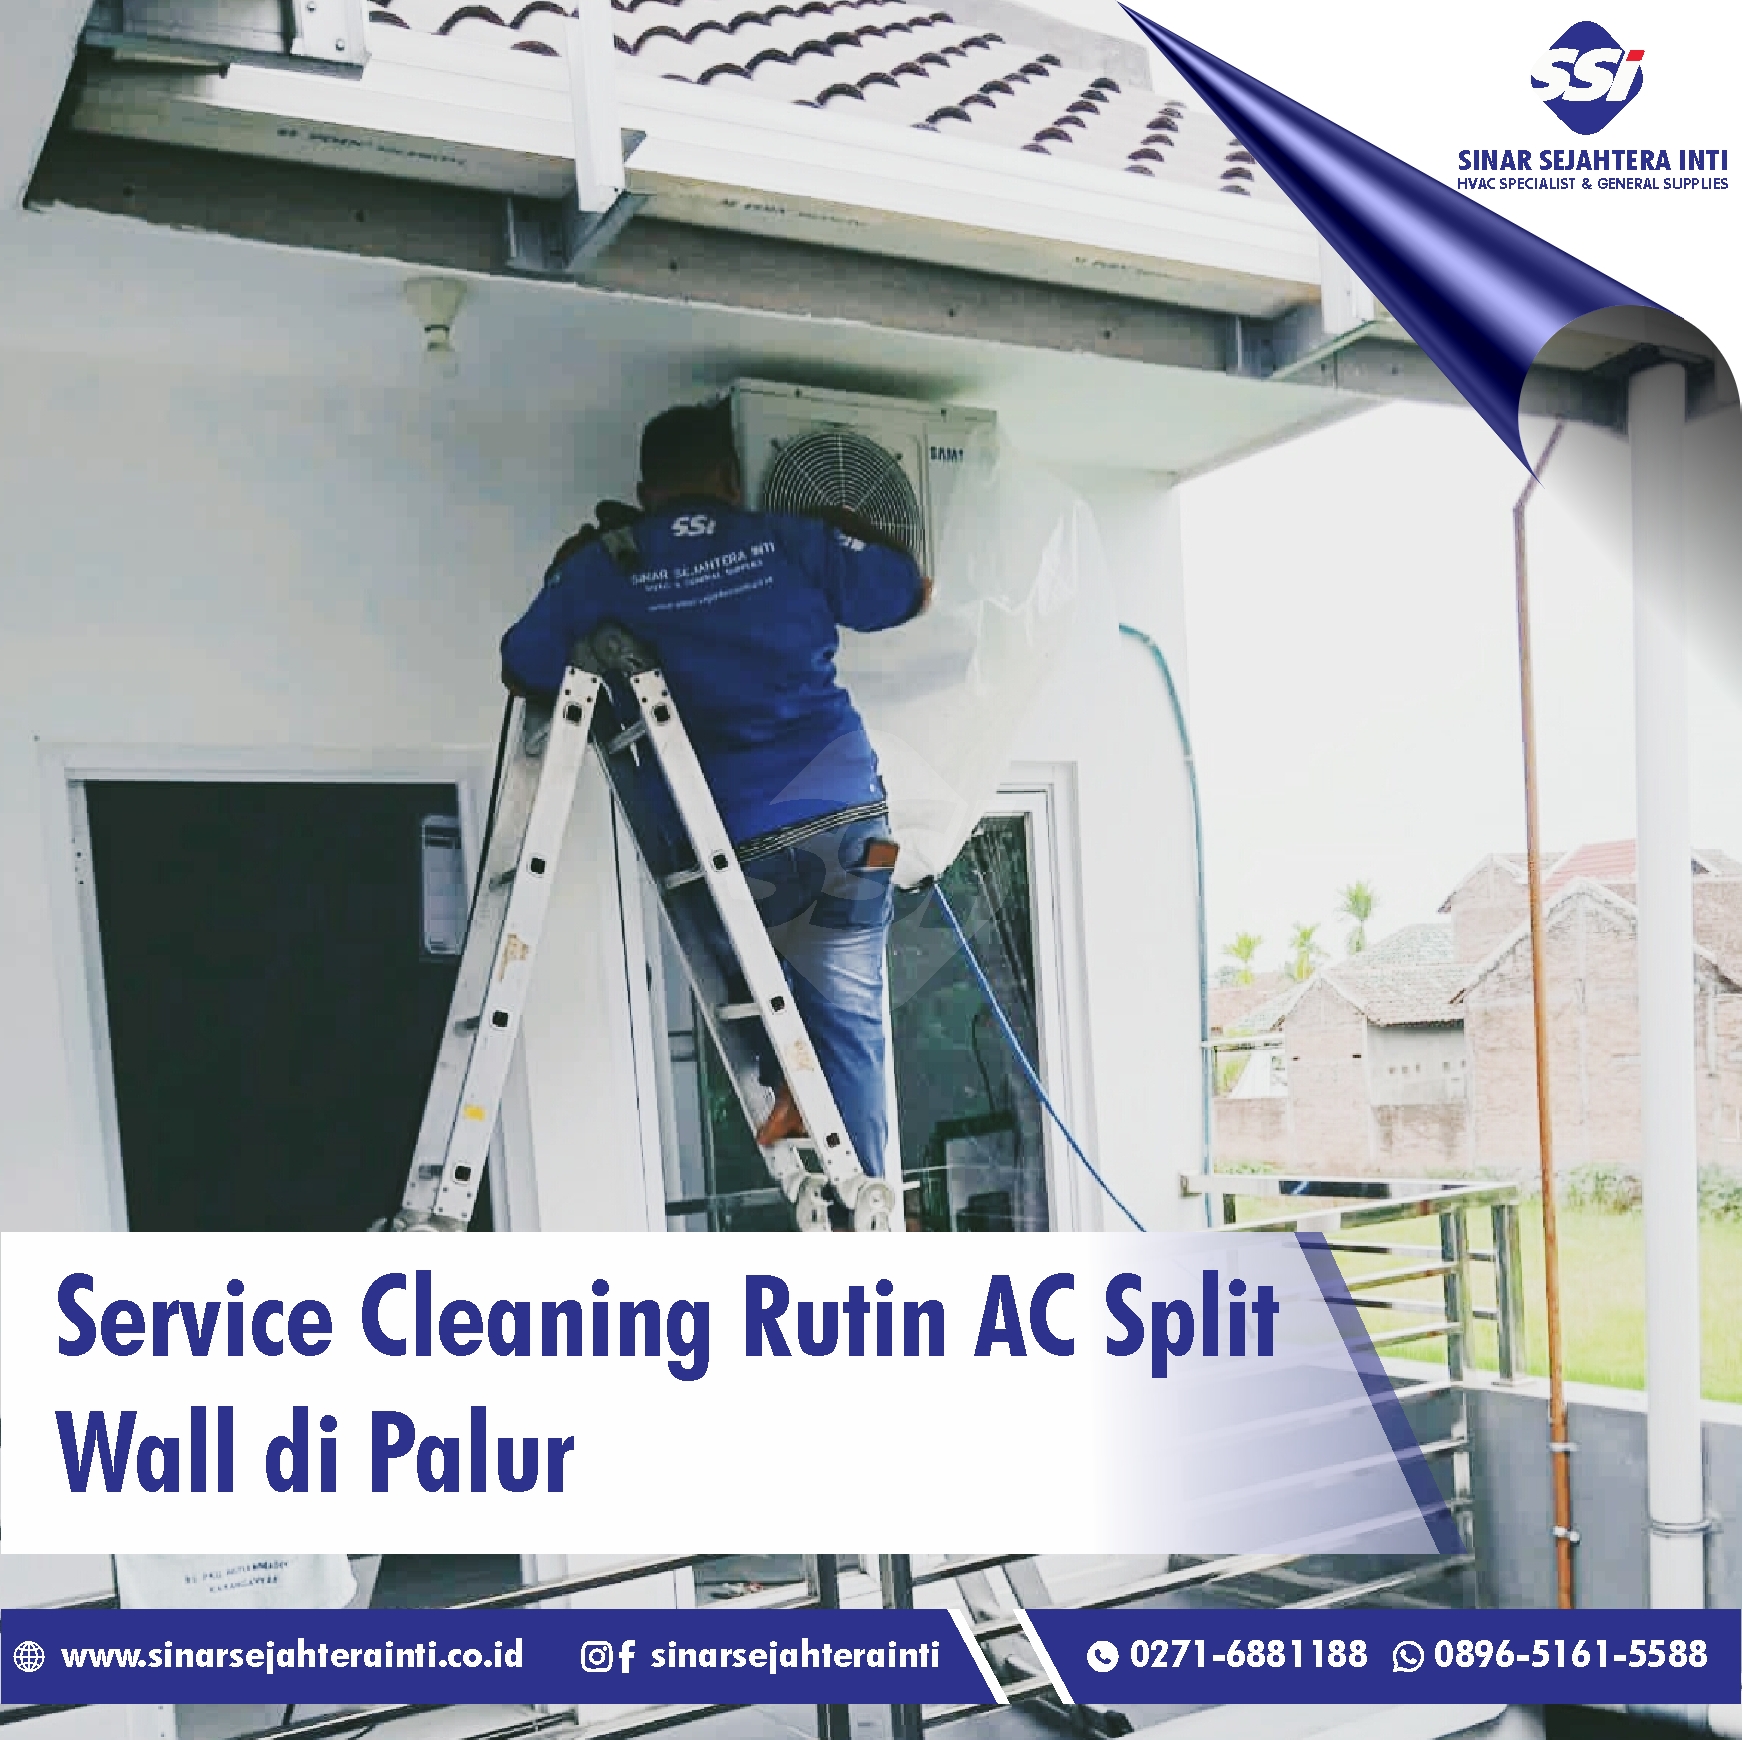 Service Cleaning Rutin AC Split Wall